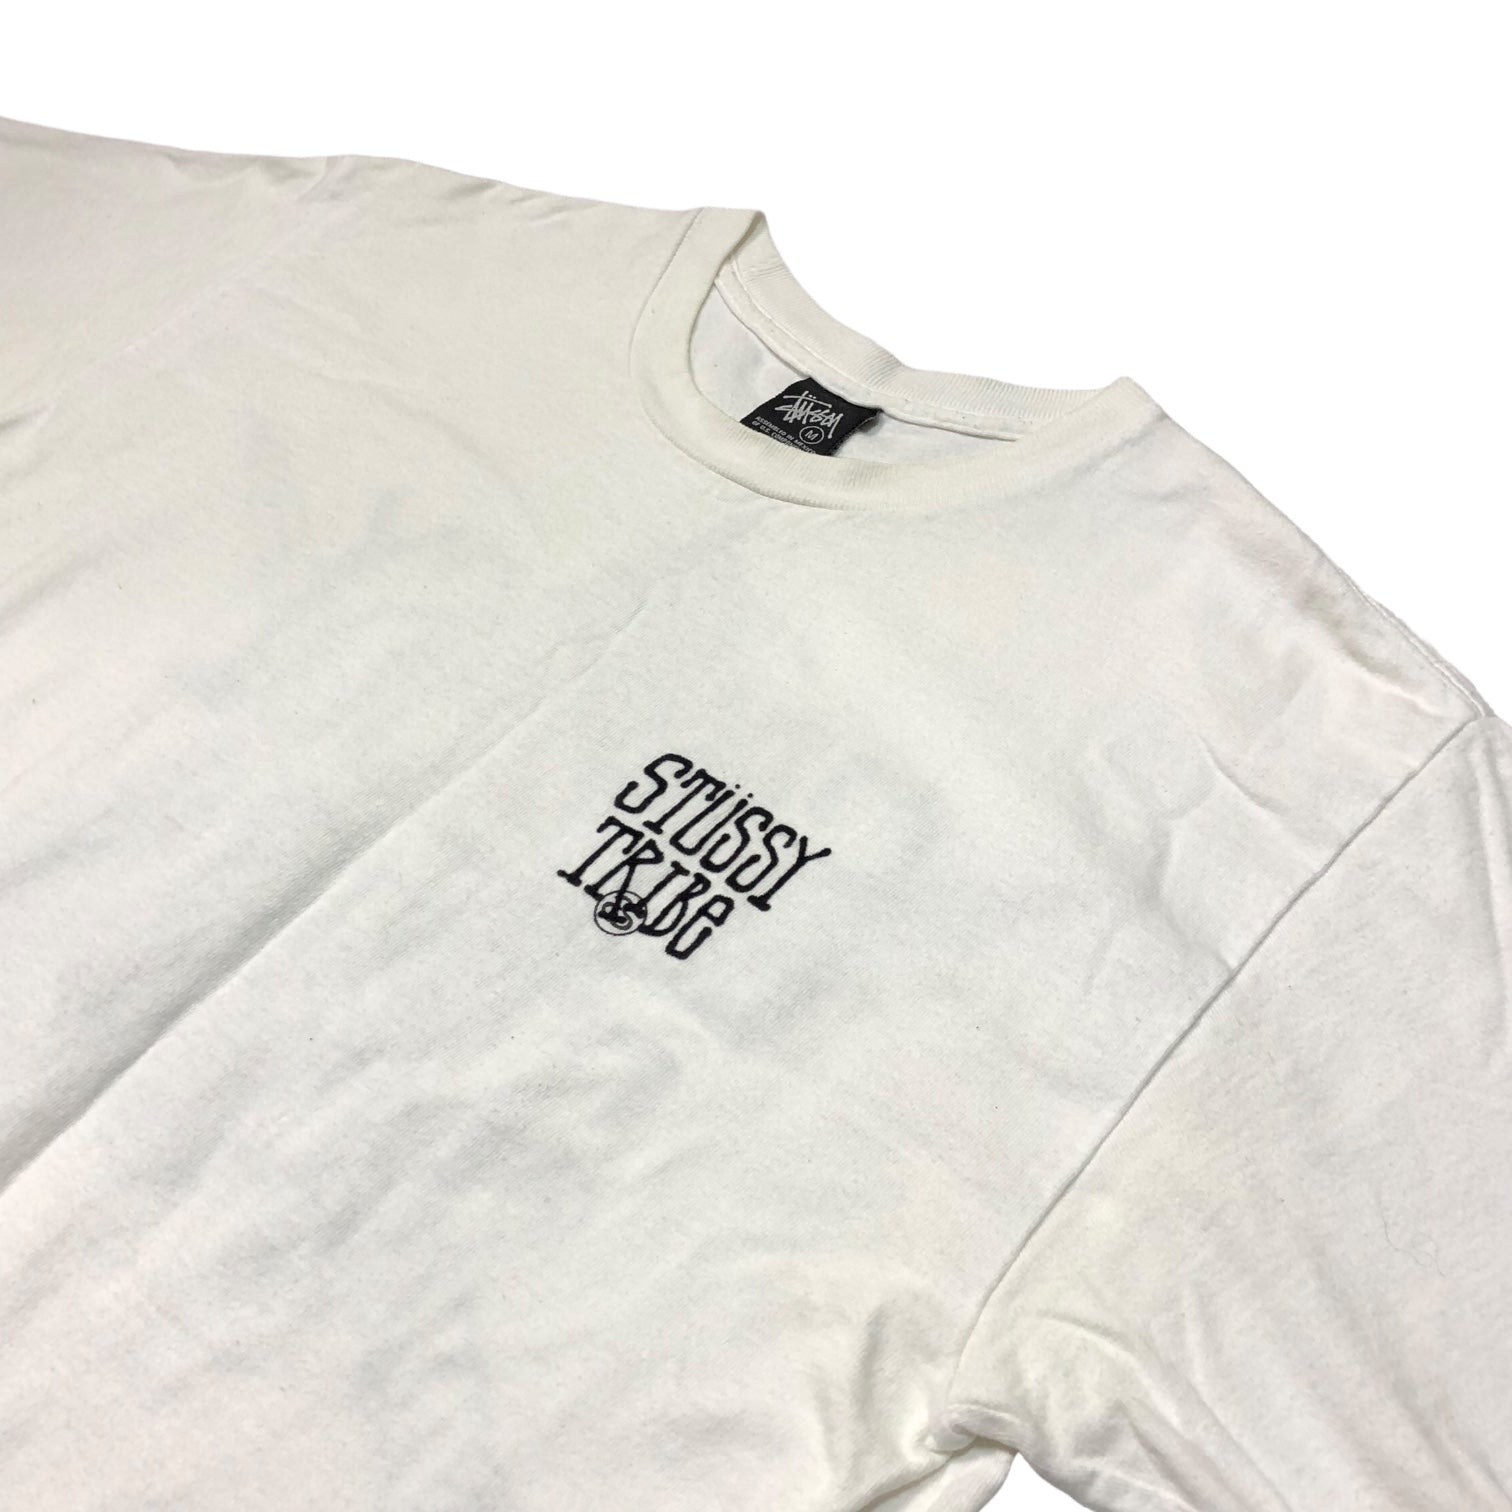 STUSSY(ステューシー) 00's VINTAGE flocky print TRIBE Tシャツ M ホワイト バックプリント クローバー×ソード OLD STUSSY